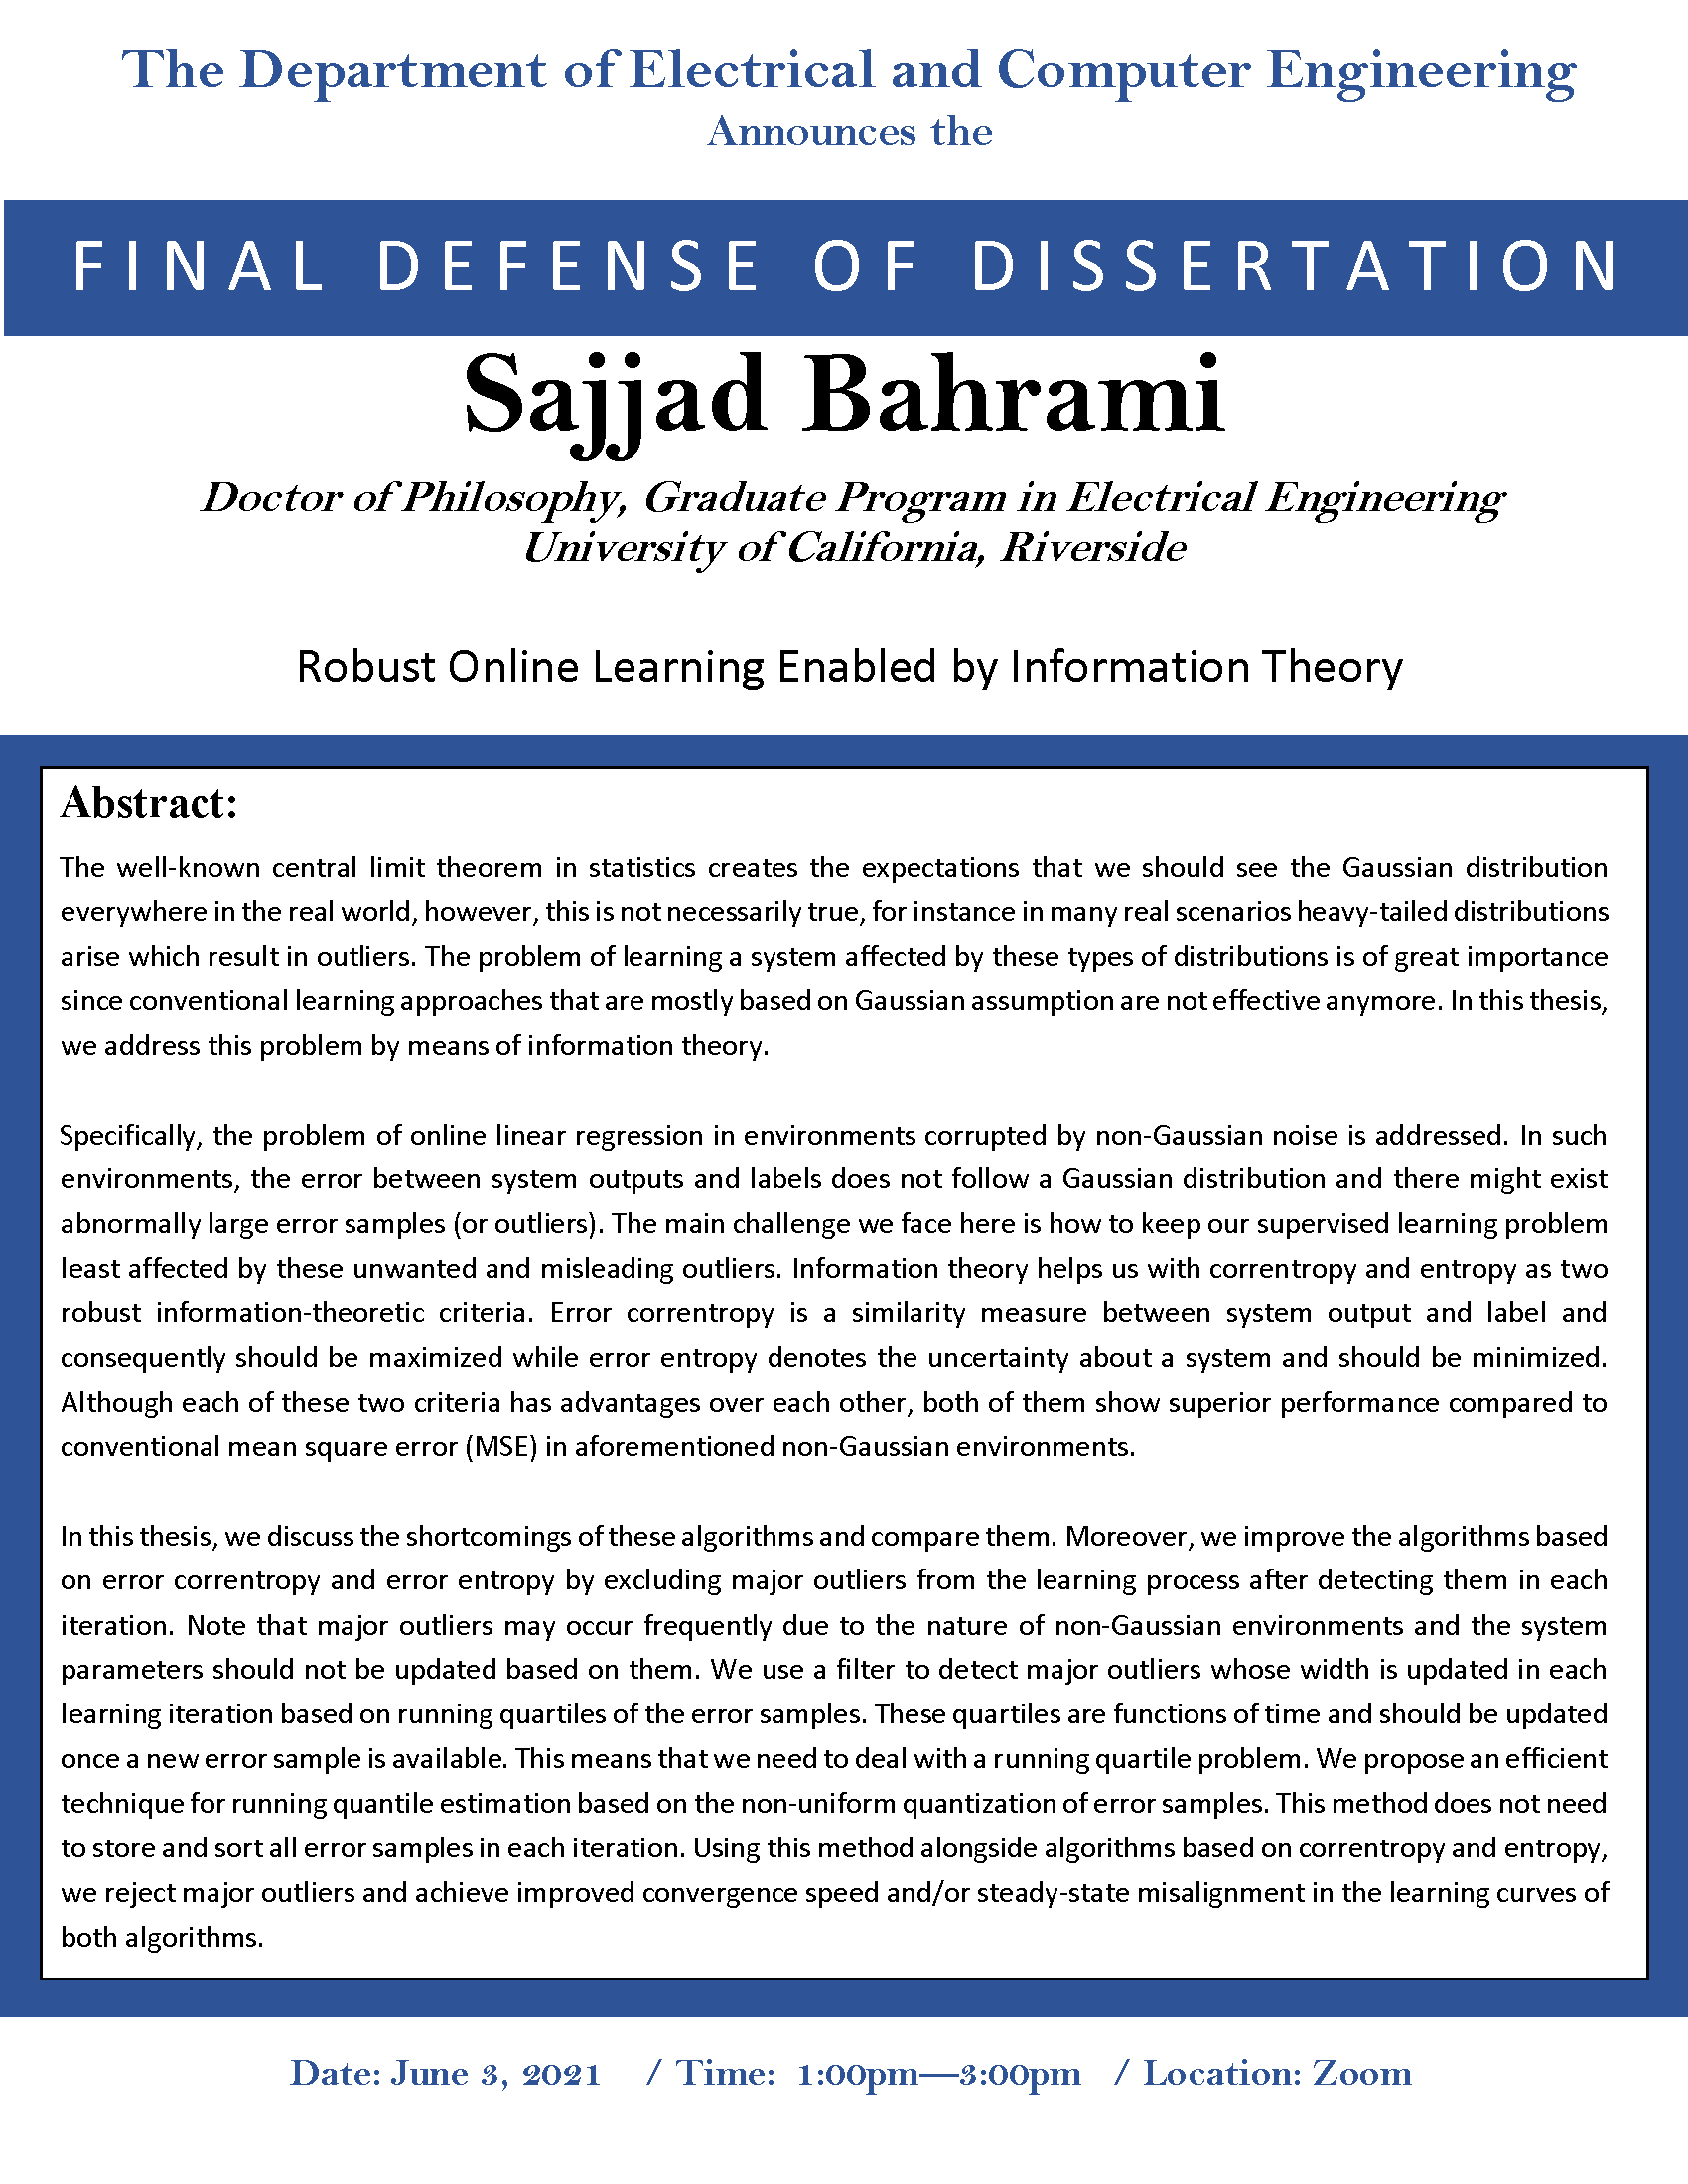 Final Defense of Dissertation: Sajjad Bahrami